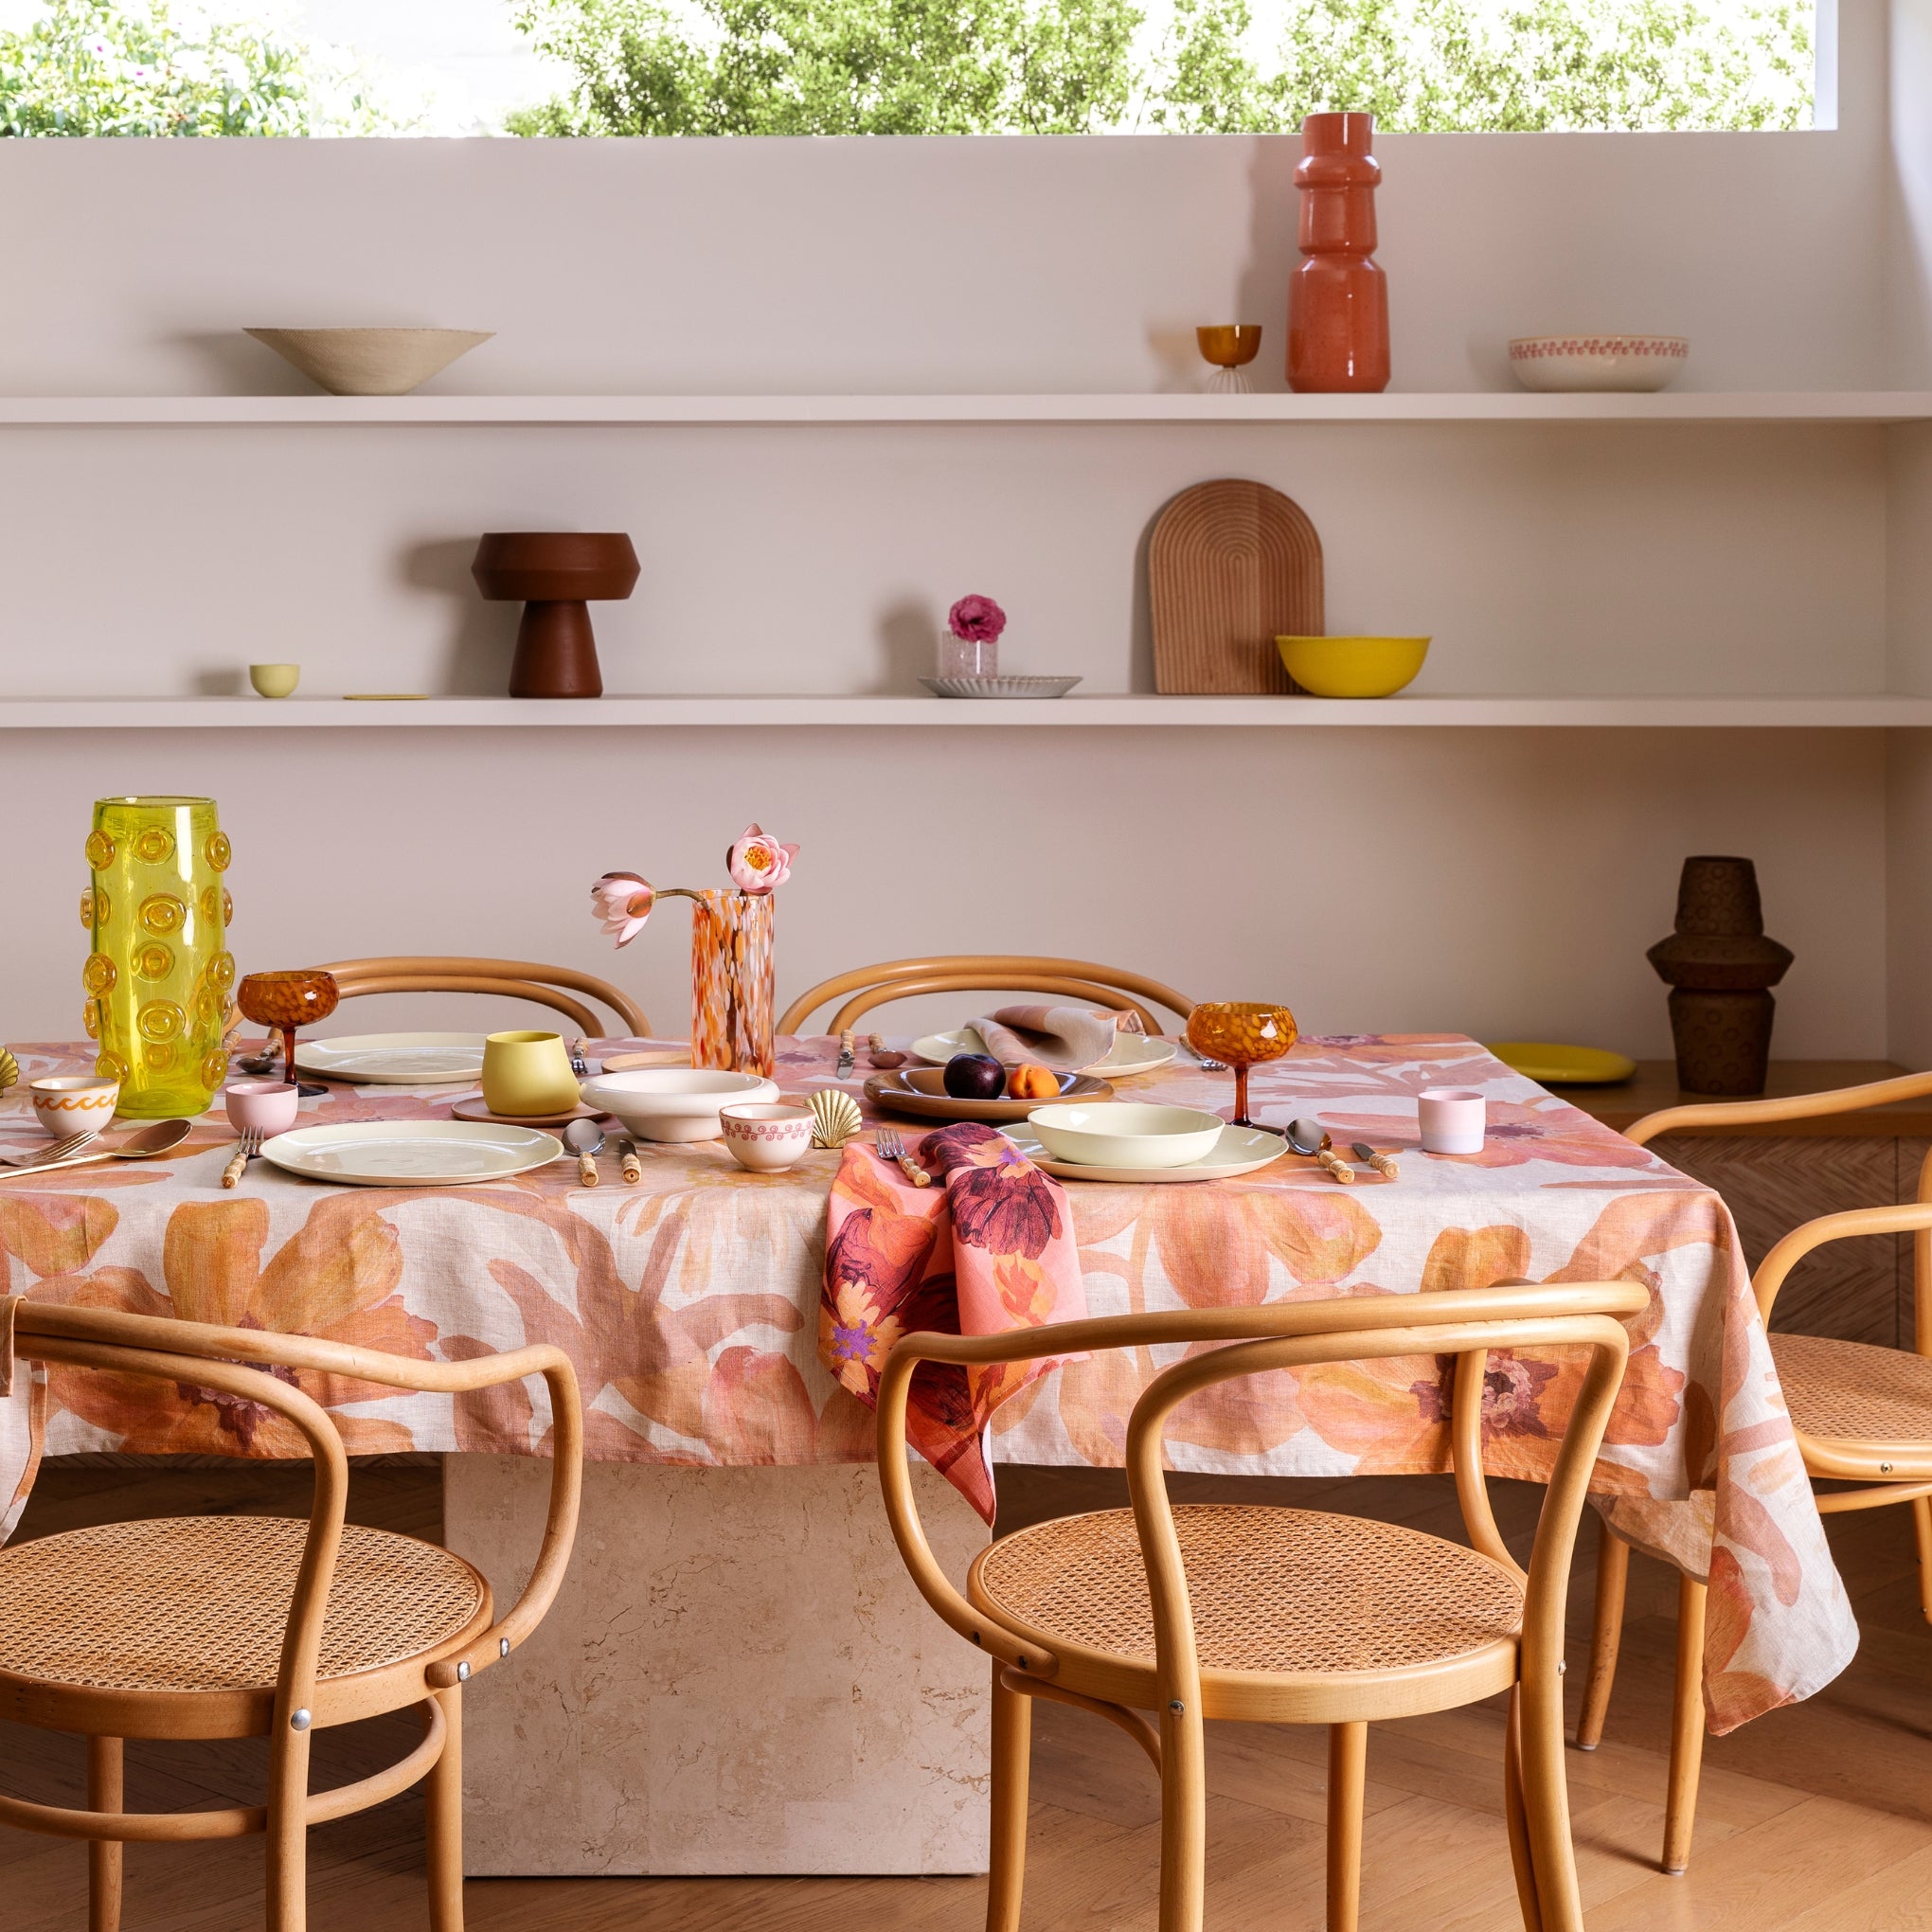 Cornflower Pink Tablecloth